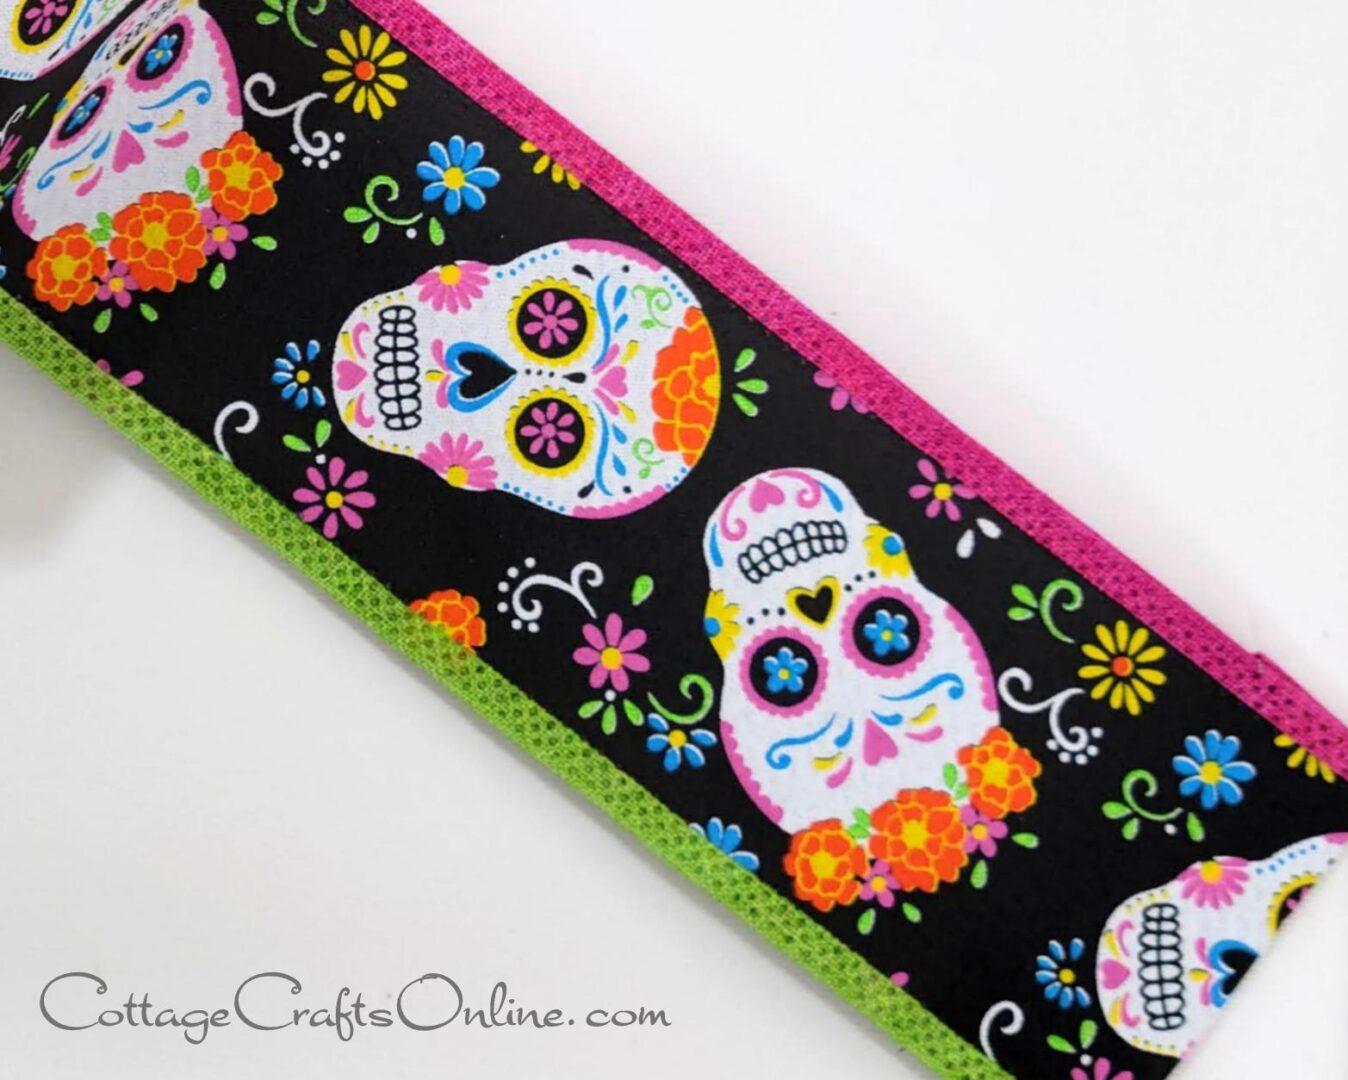 A new fall ribbon featuring colorful sugar skulls.